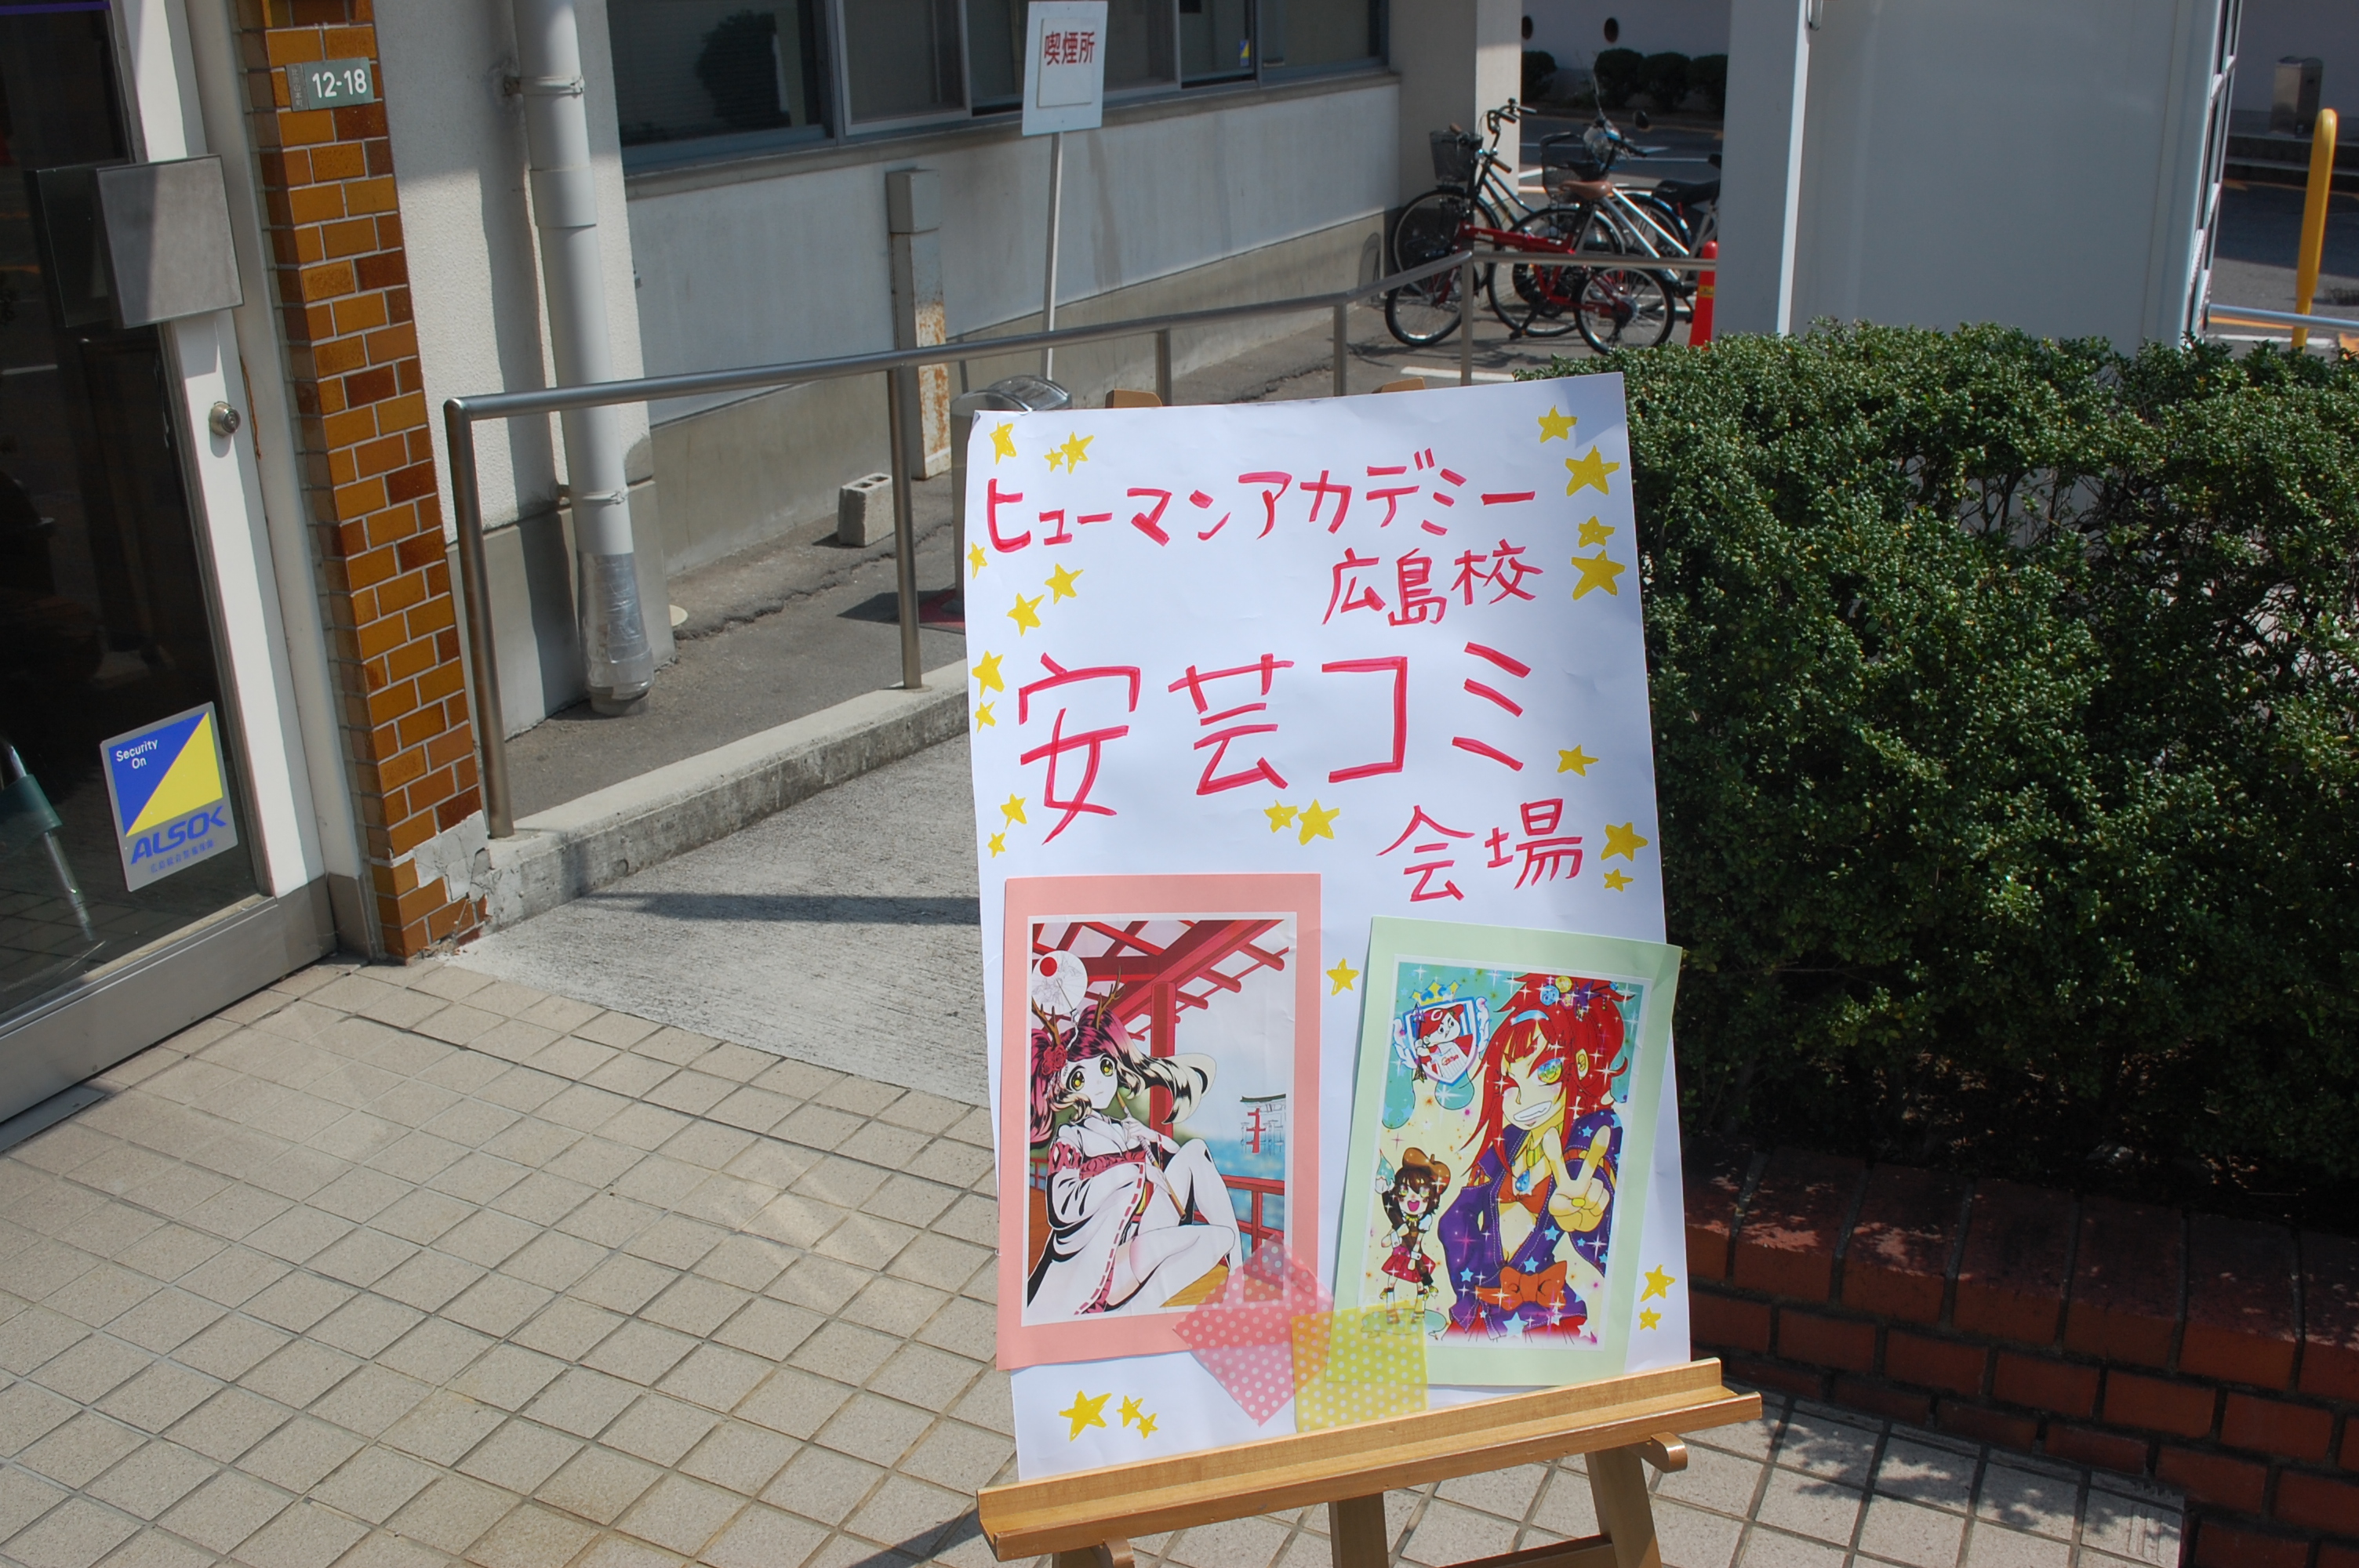 http://www.hchs.ed.jp/campus/hiroshima/2014/08/26/images/DSC_0434.JPG